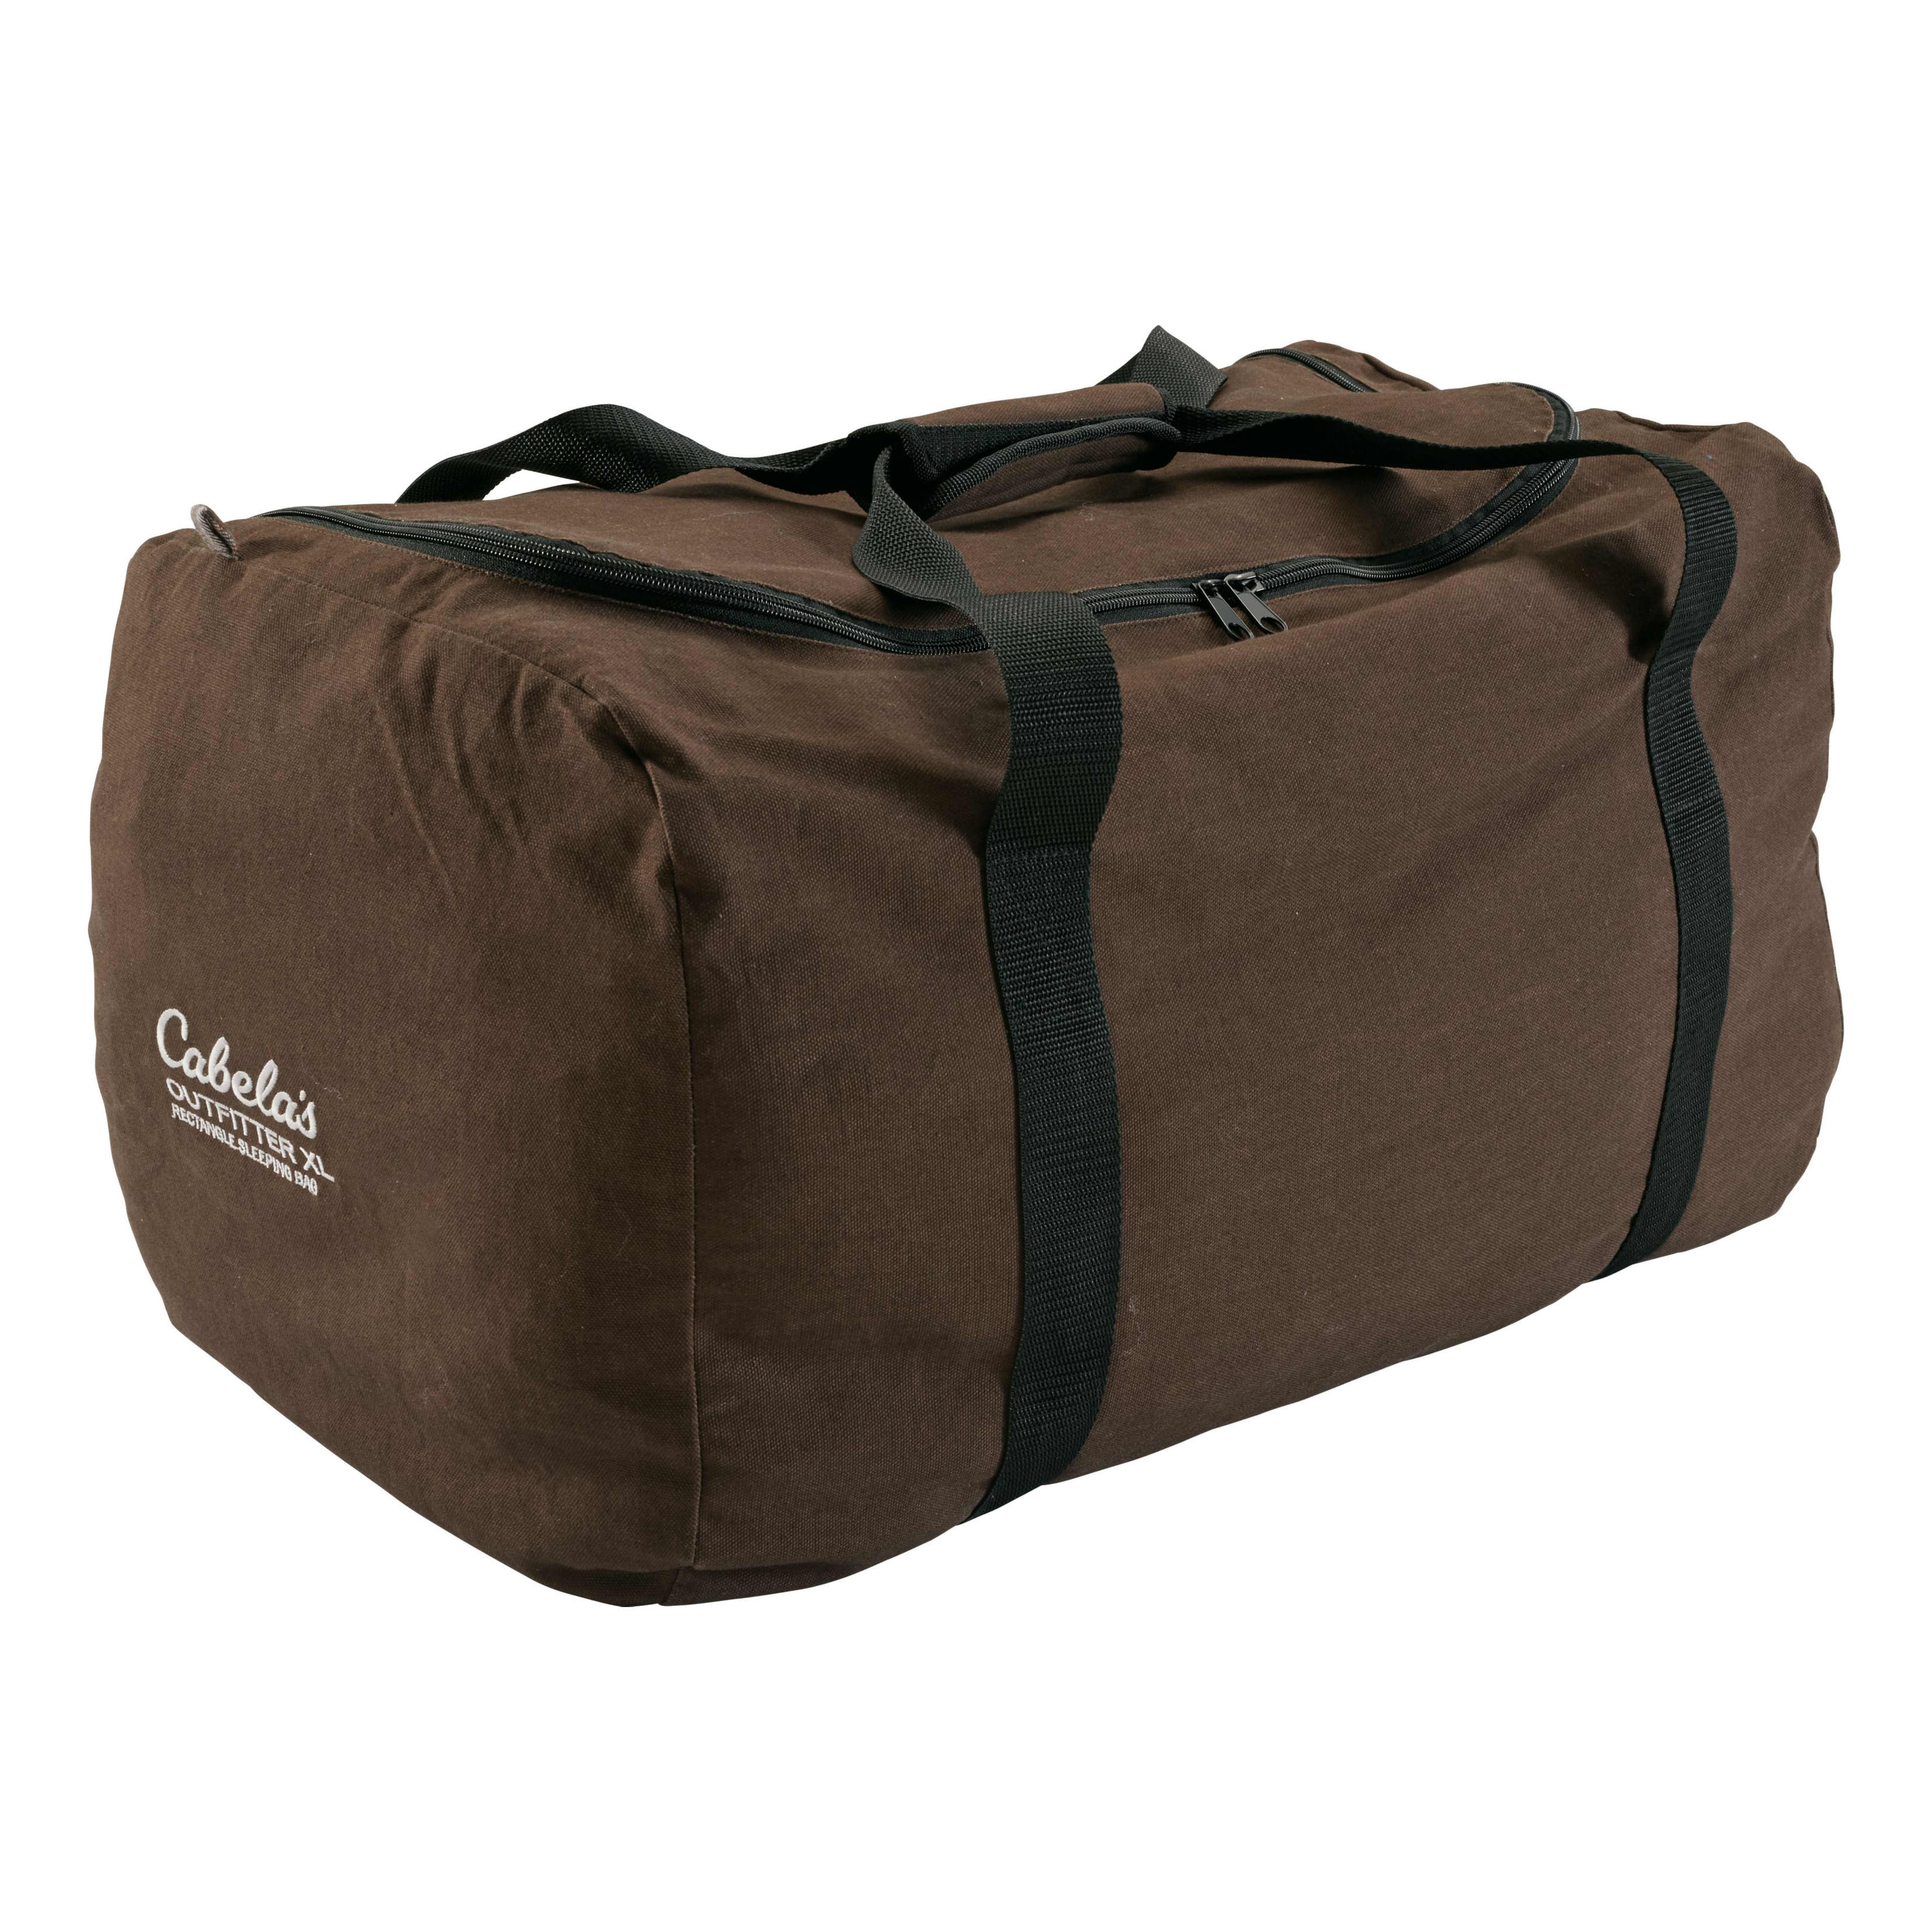 Cabela’s Outfitter XL -18°C Sleeping Bag - Stuff Sack